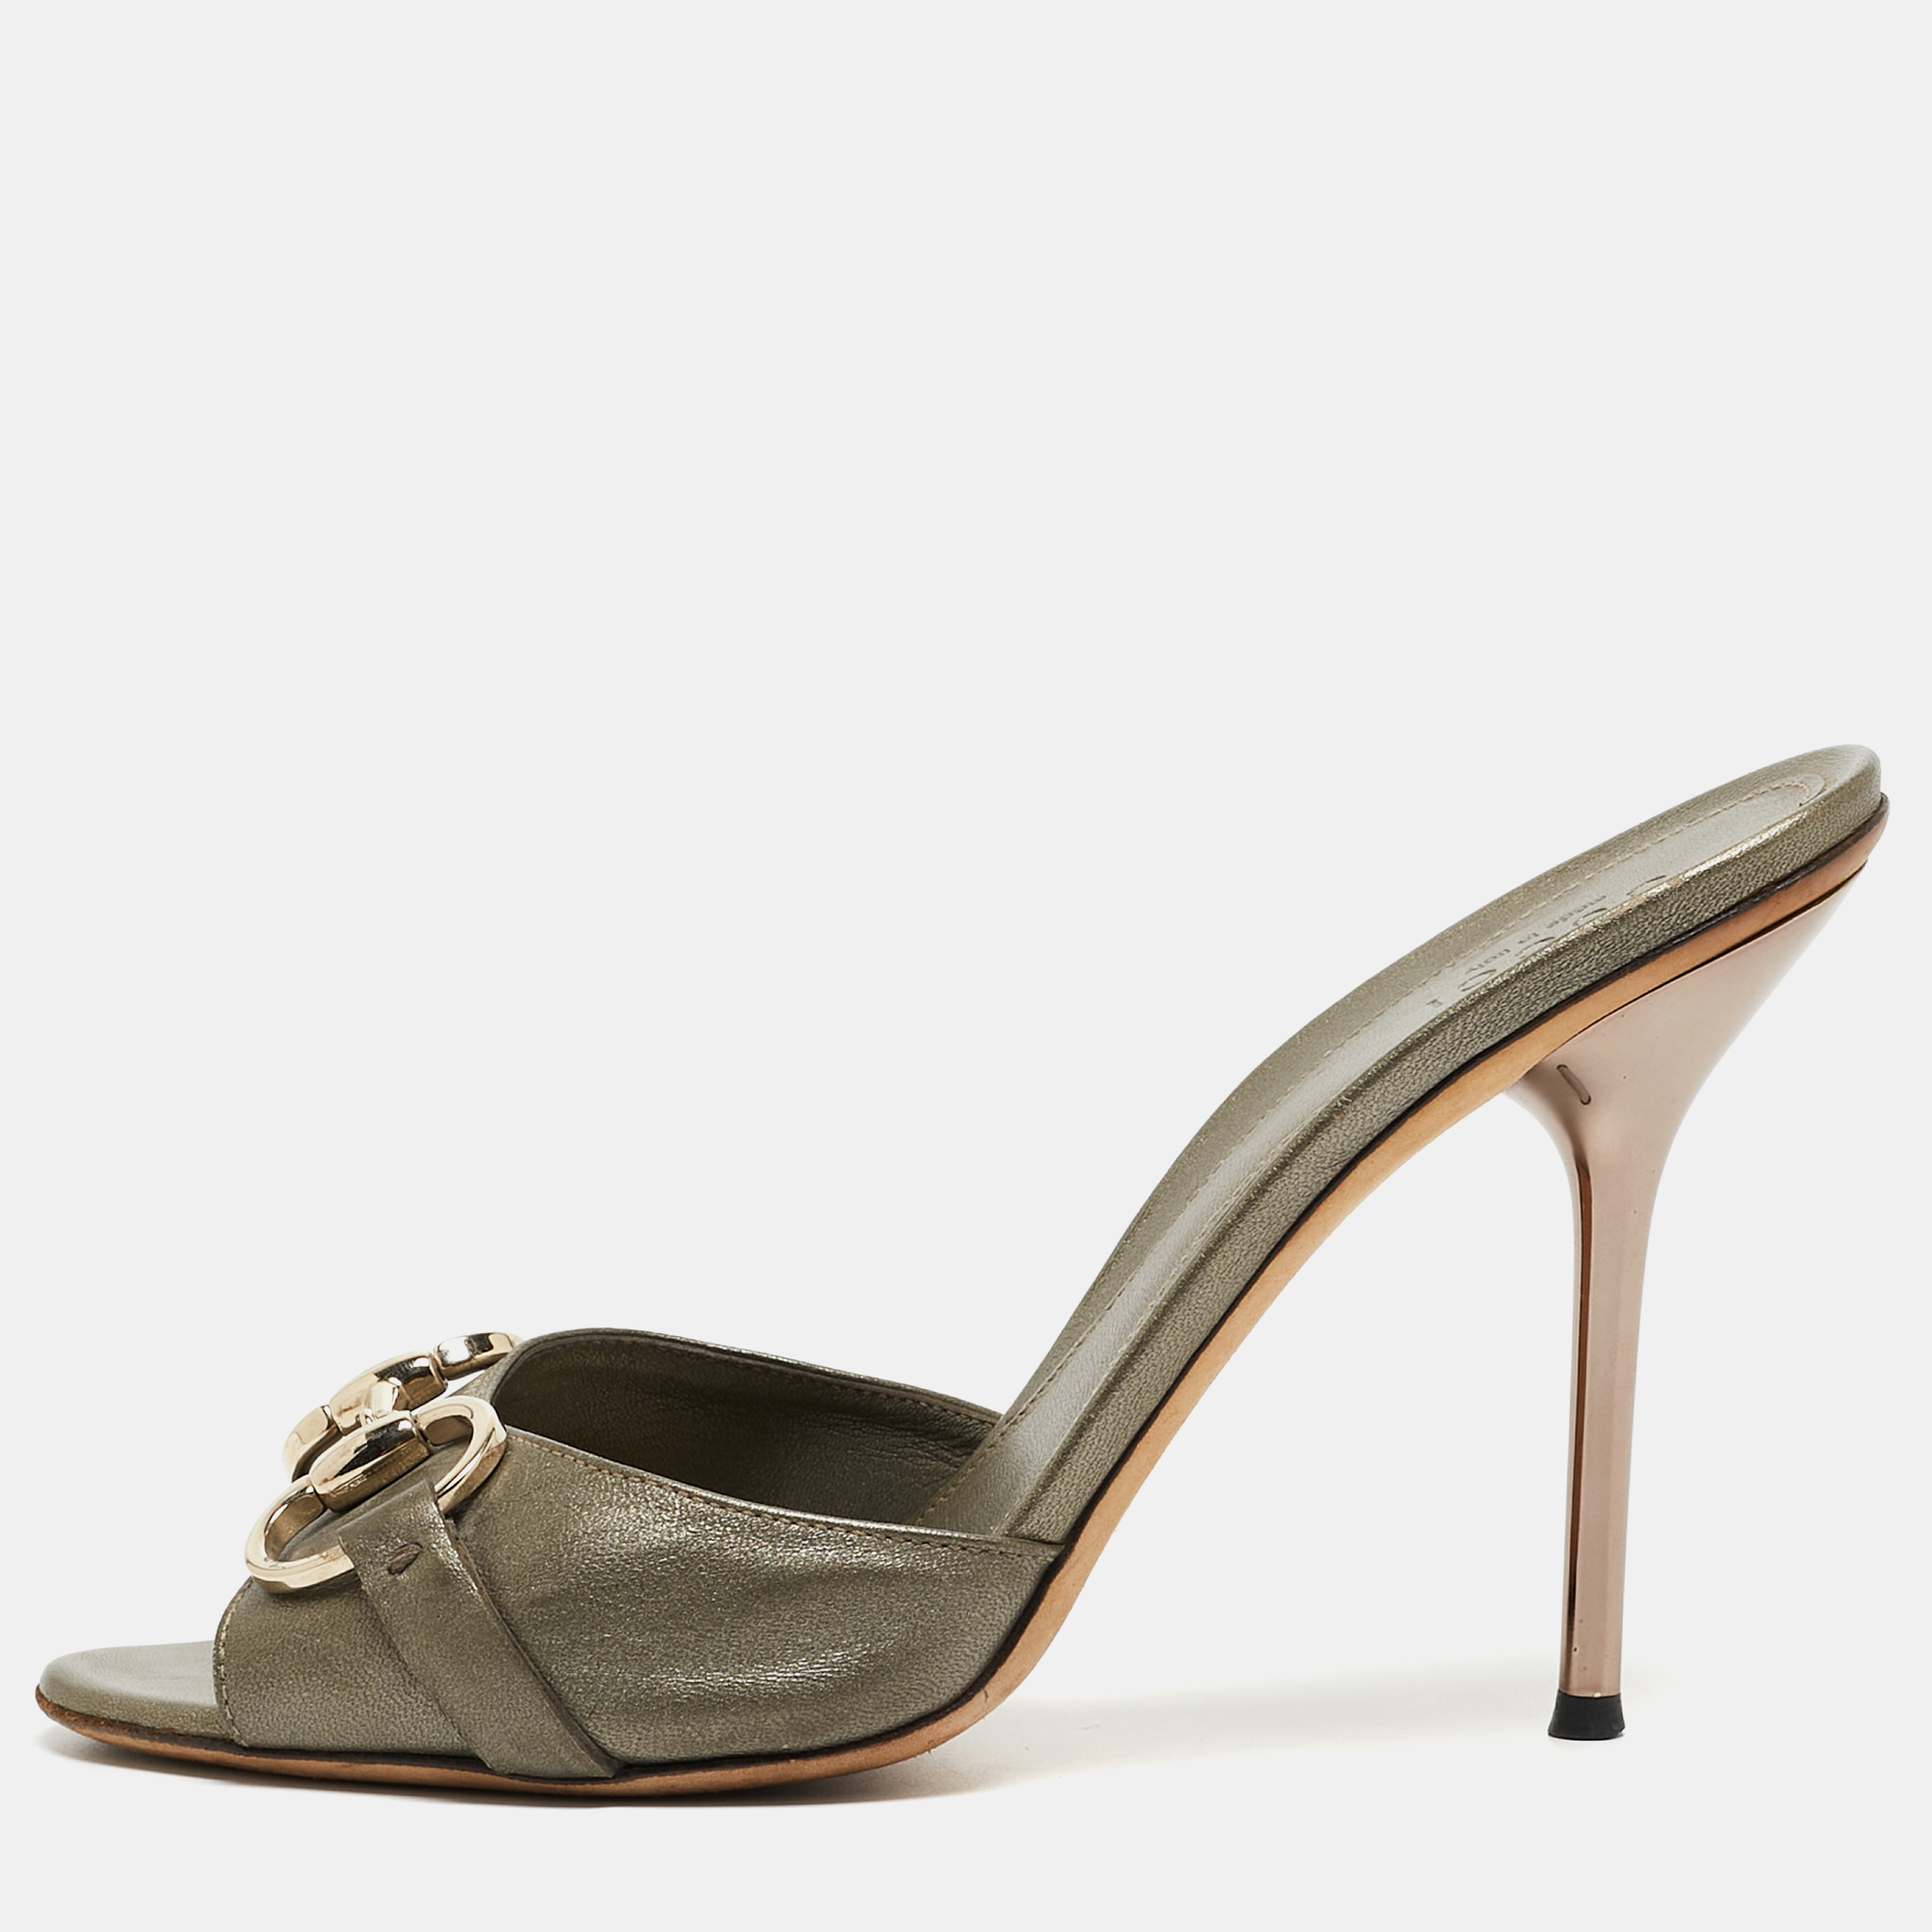 Gucci Metallic Leather Horsebit Slide Sandals Size 37